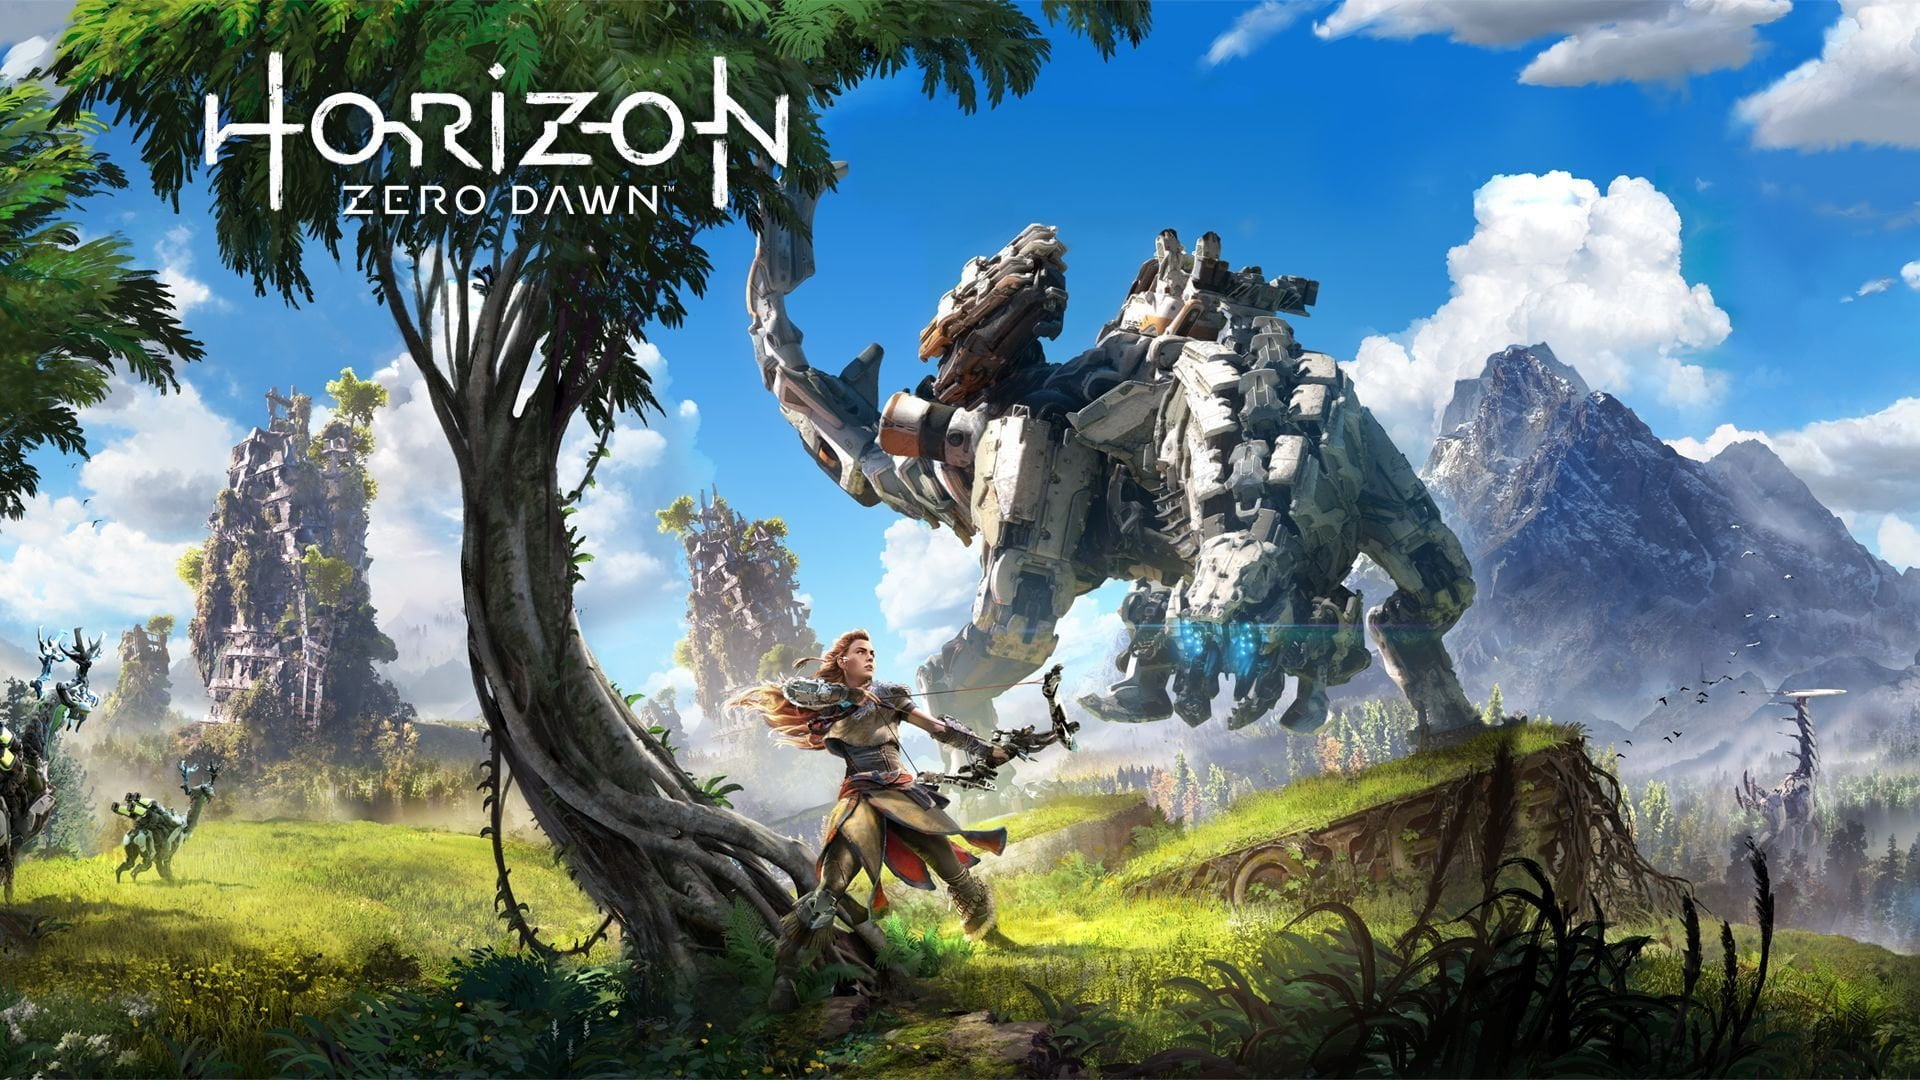 Horizon zero dawn: jogo chegará ao pc | thumb 1920 718467 | guerrilla games, horizon zero dawn, pc, playstation 4 | horizon: zero dawn notícias